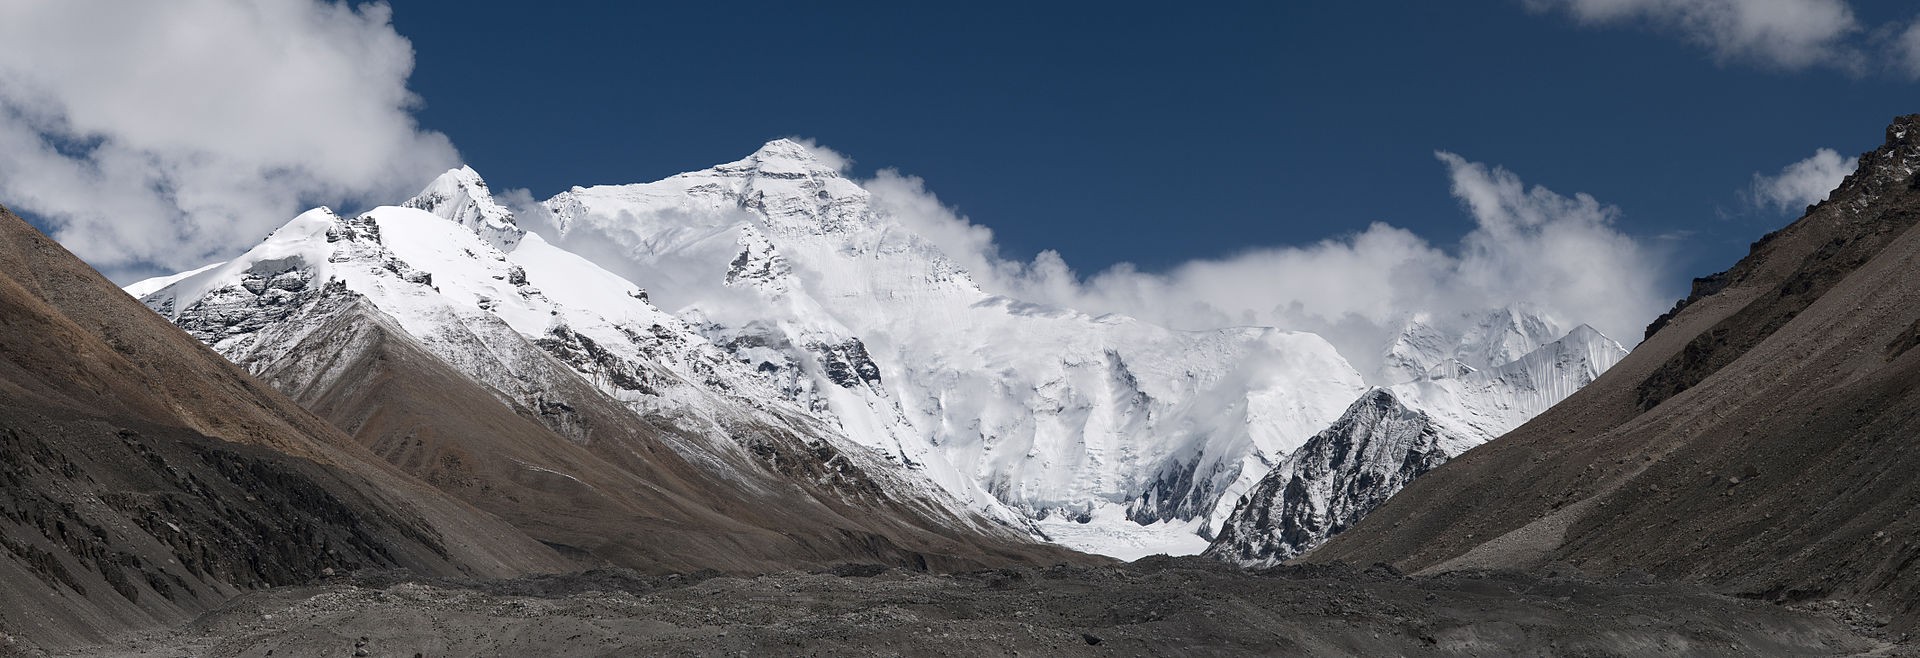 Everest Region Trekking| Trekking in Nepal | Enlighten Trip